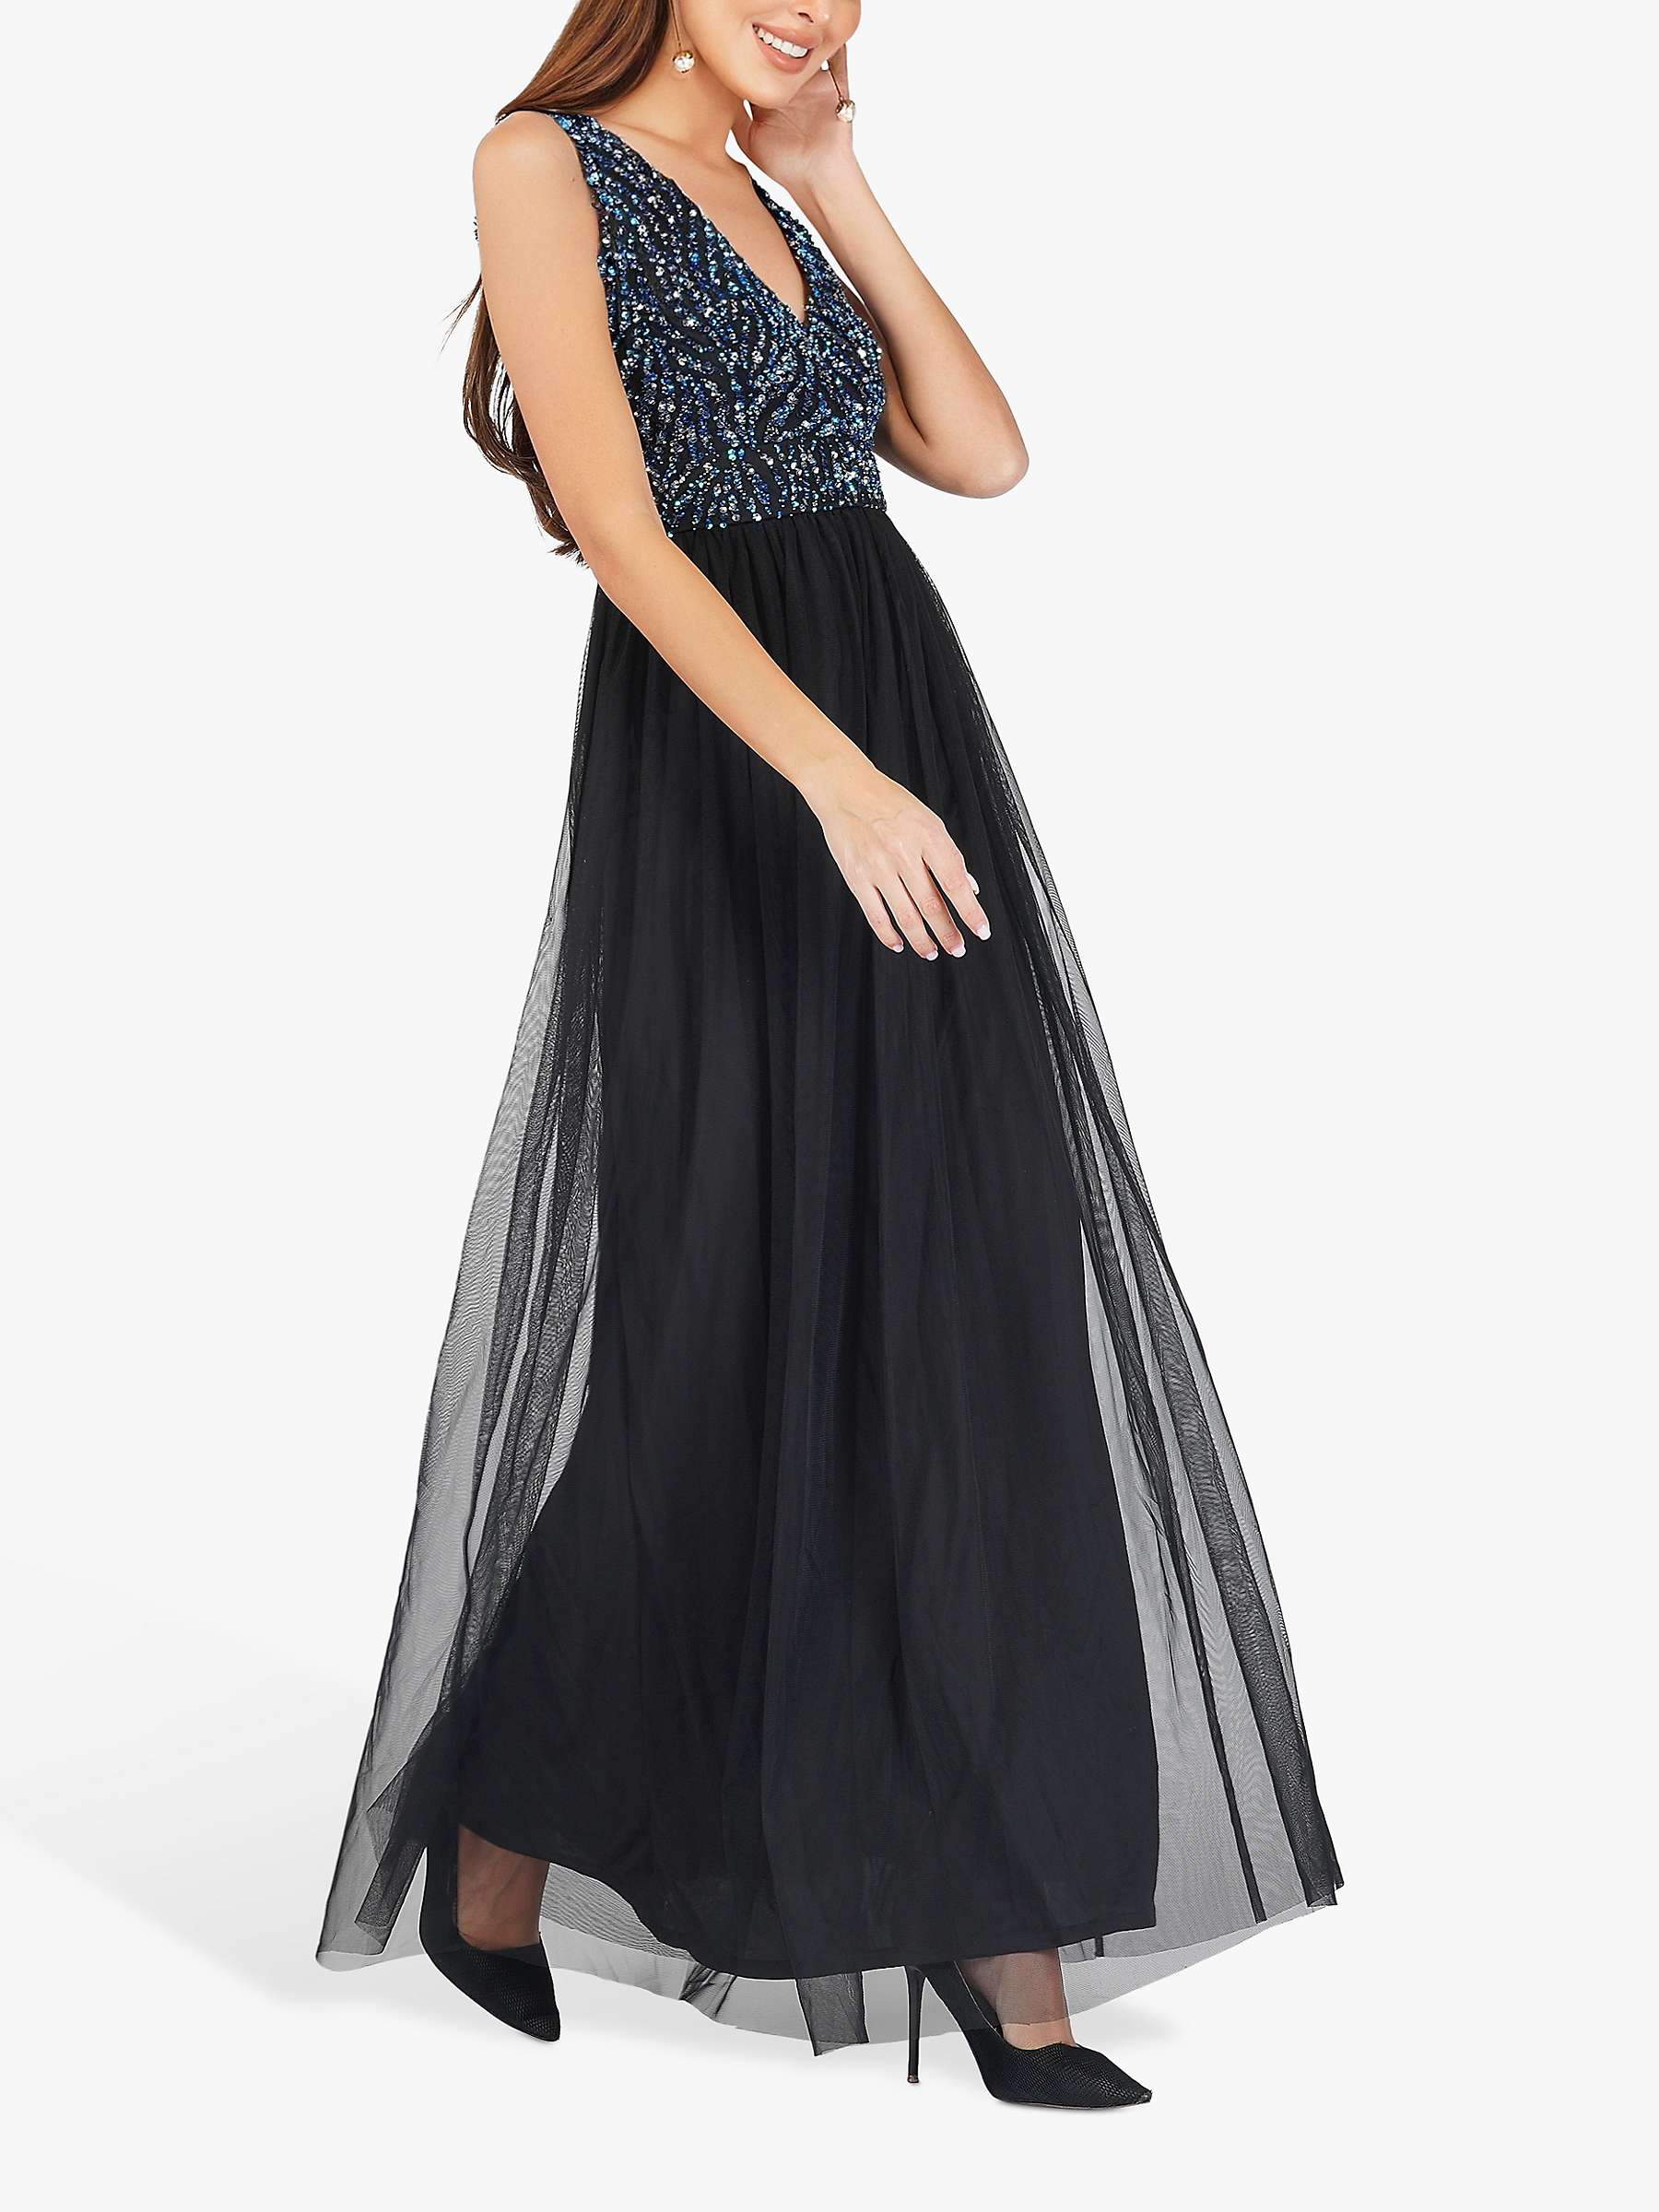 Buy Lace & Beads Ada Embellished Layered Mesh Maxi Dress, Black Online at johnlewis.com